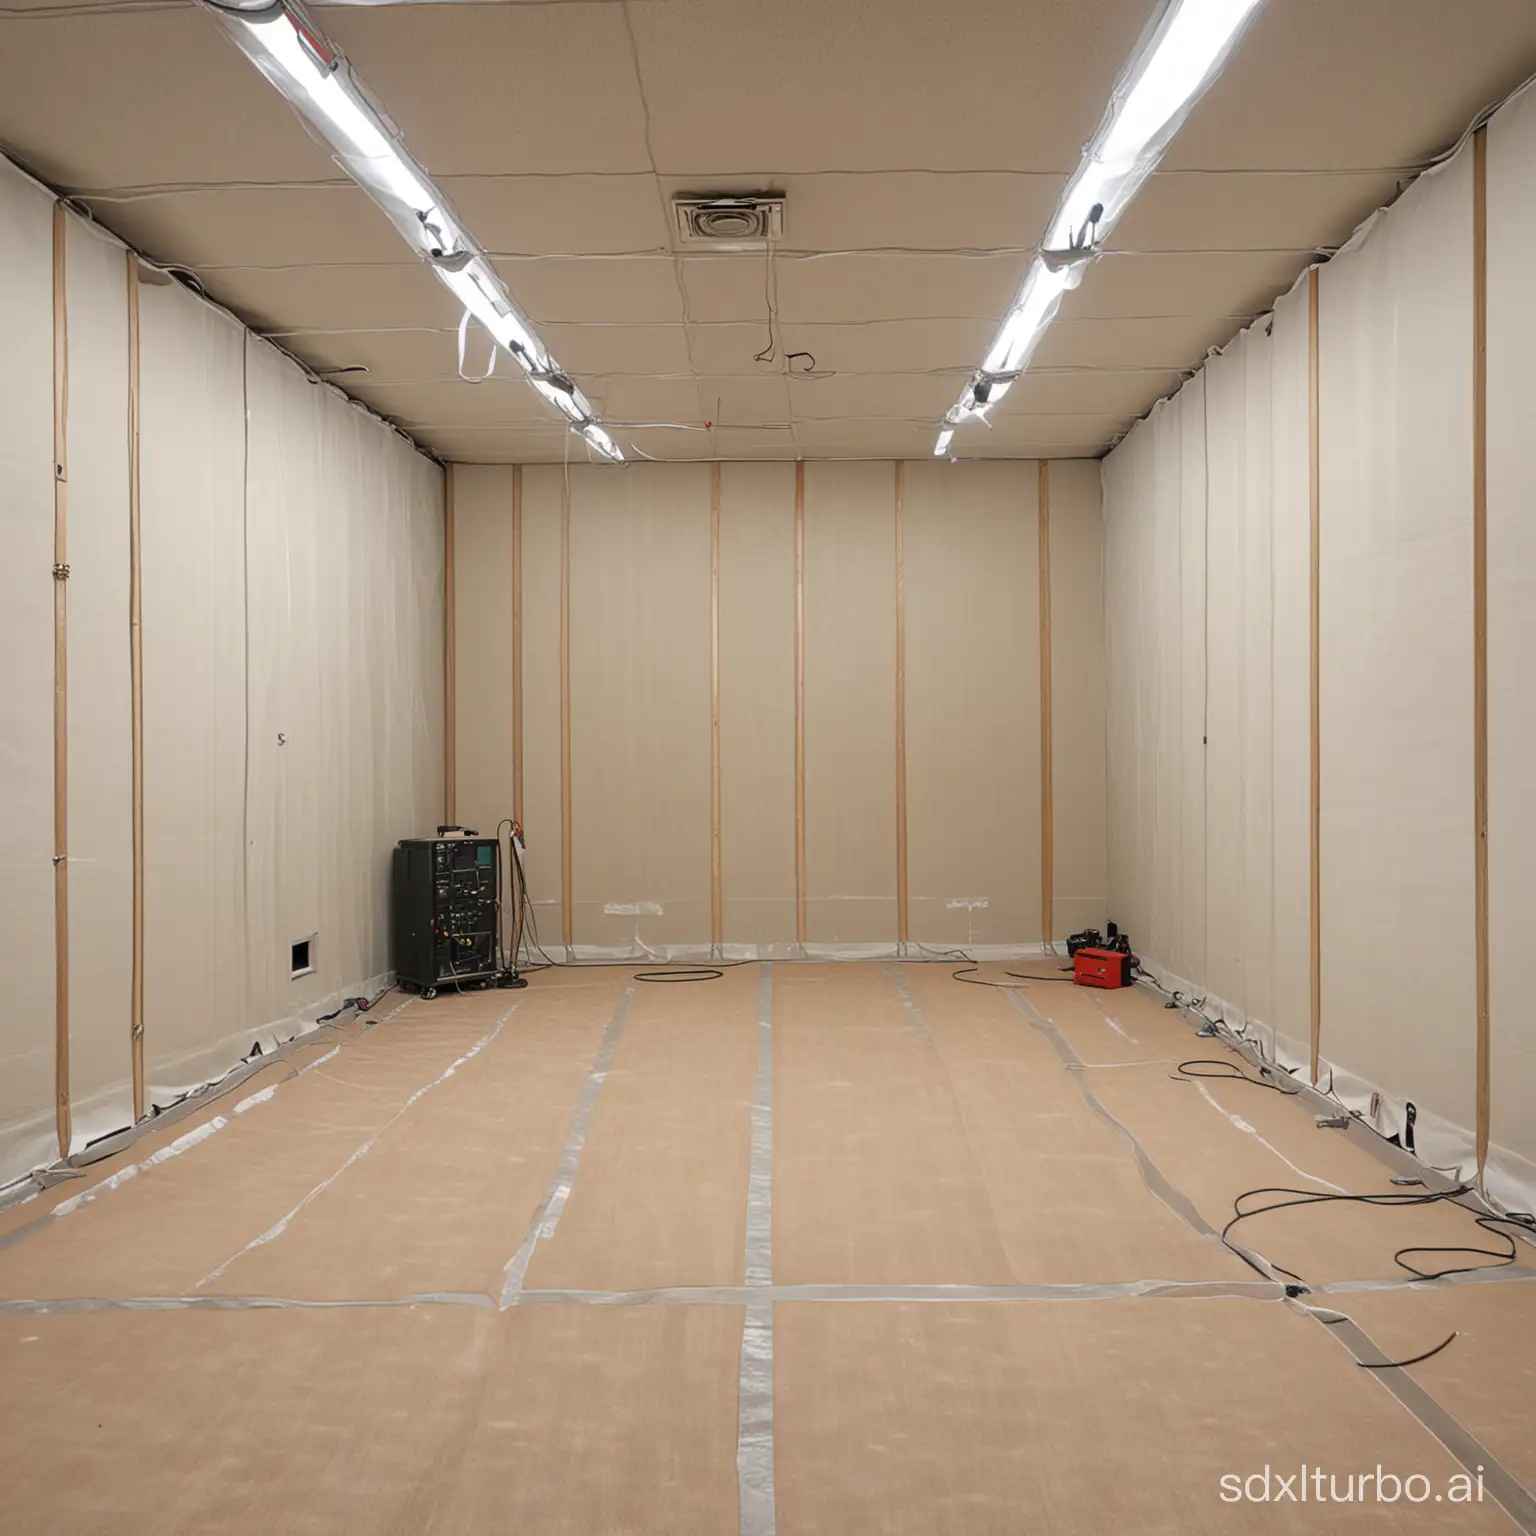 Reverberation room sound insulation test